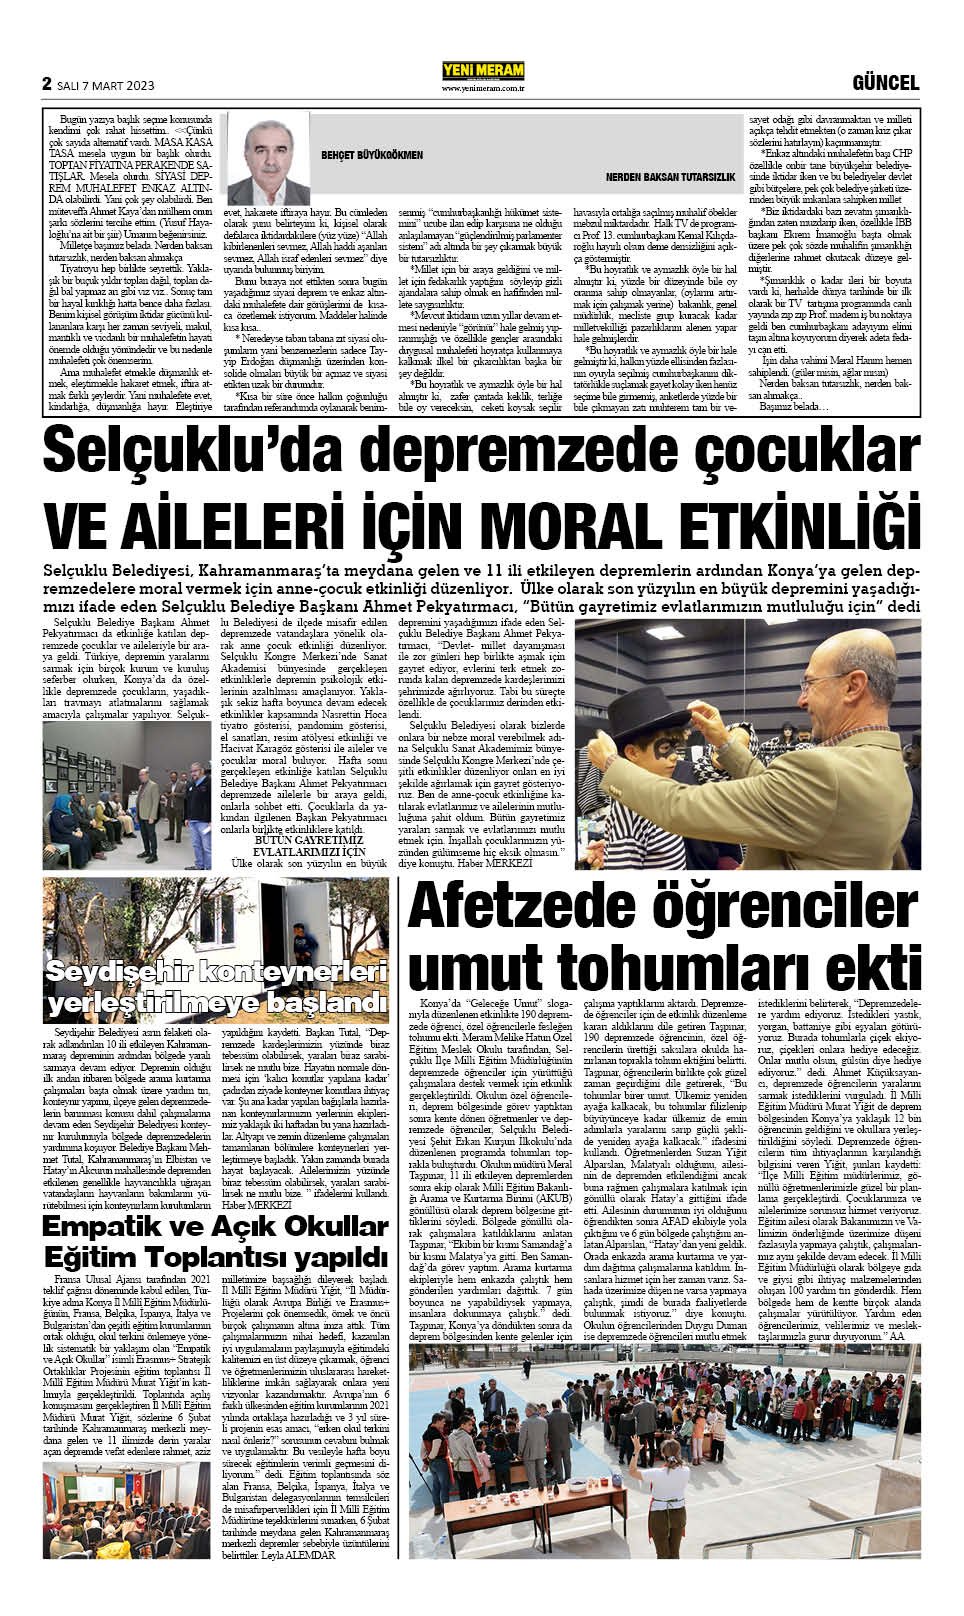 7 Mart 2023 Yeni Meram Gazetesi